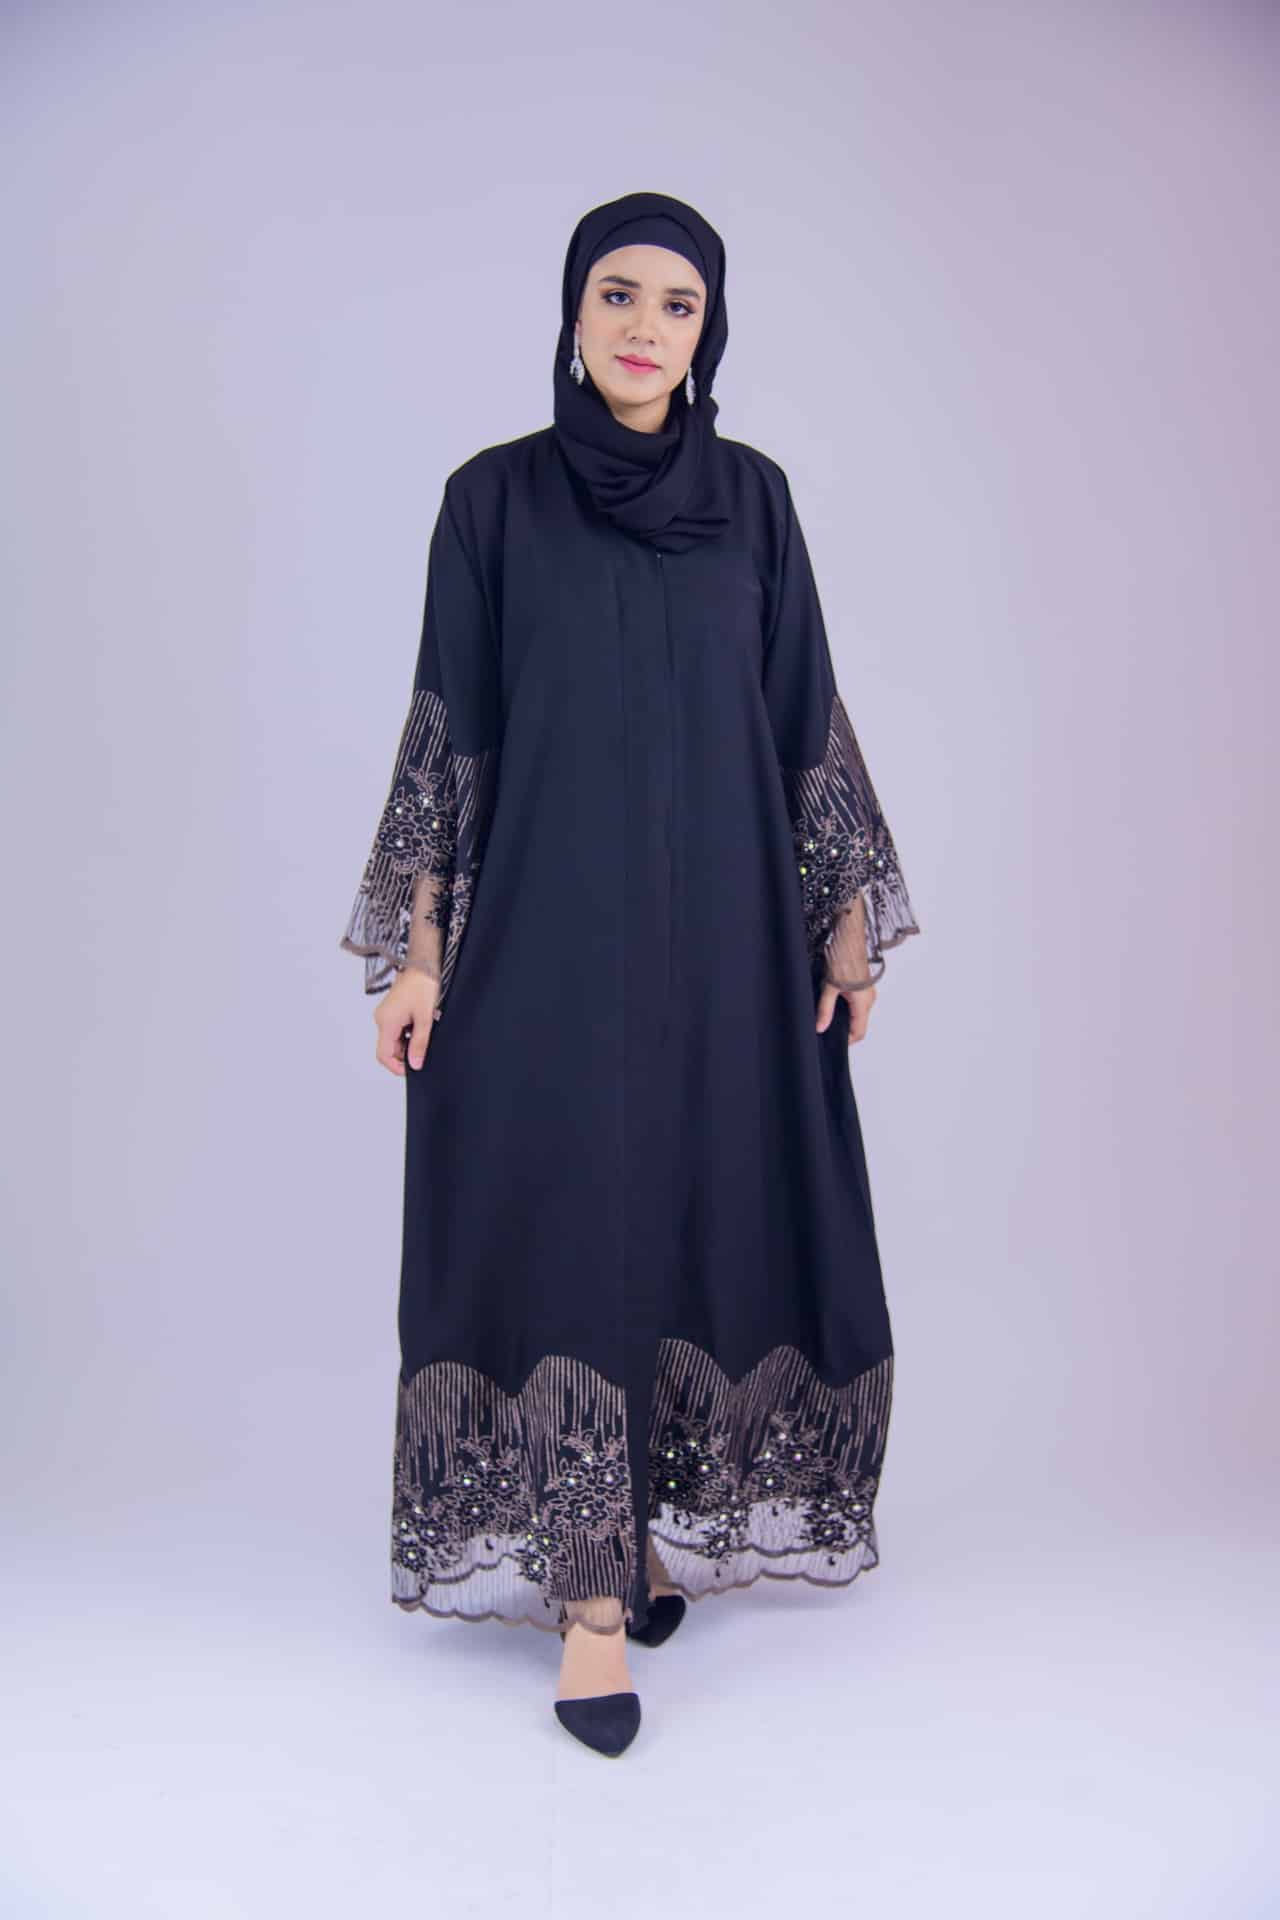 Abaya Brands in Pakistan